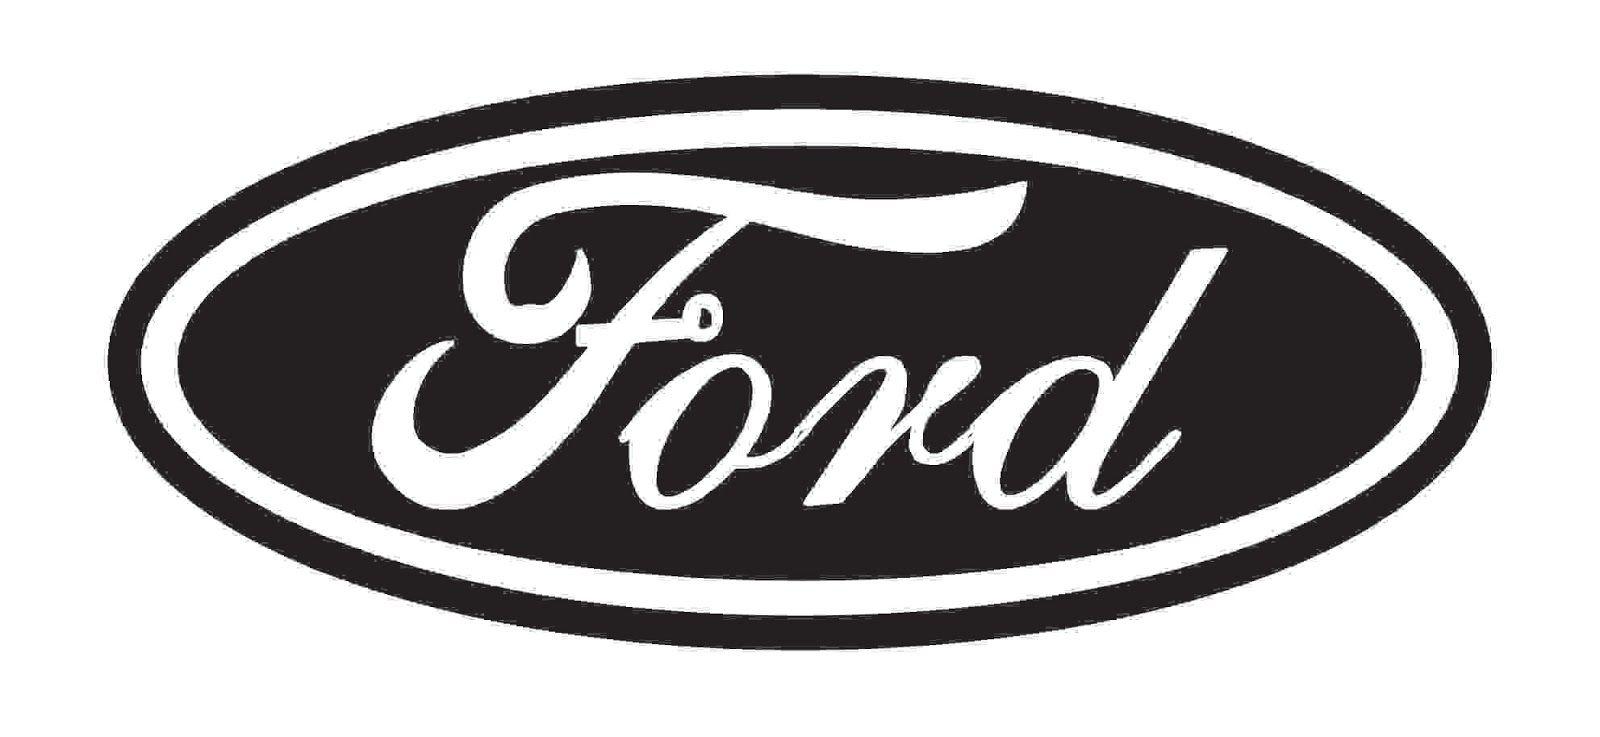 Printable Ford Logo - Free Emblem Cliparts, Download Free Clip Art, Free Clip Art on ...